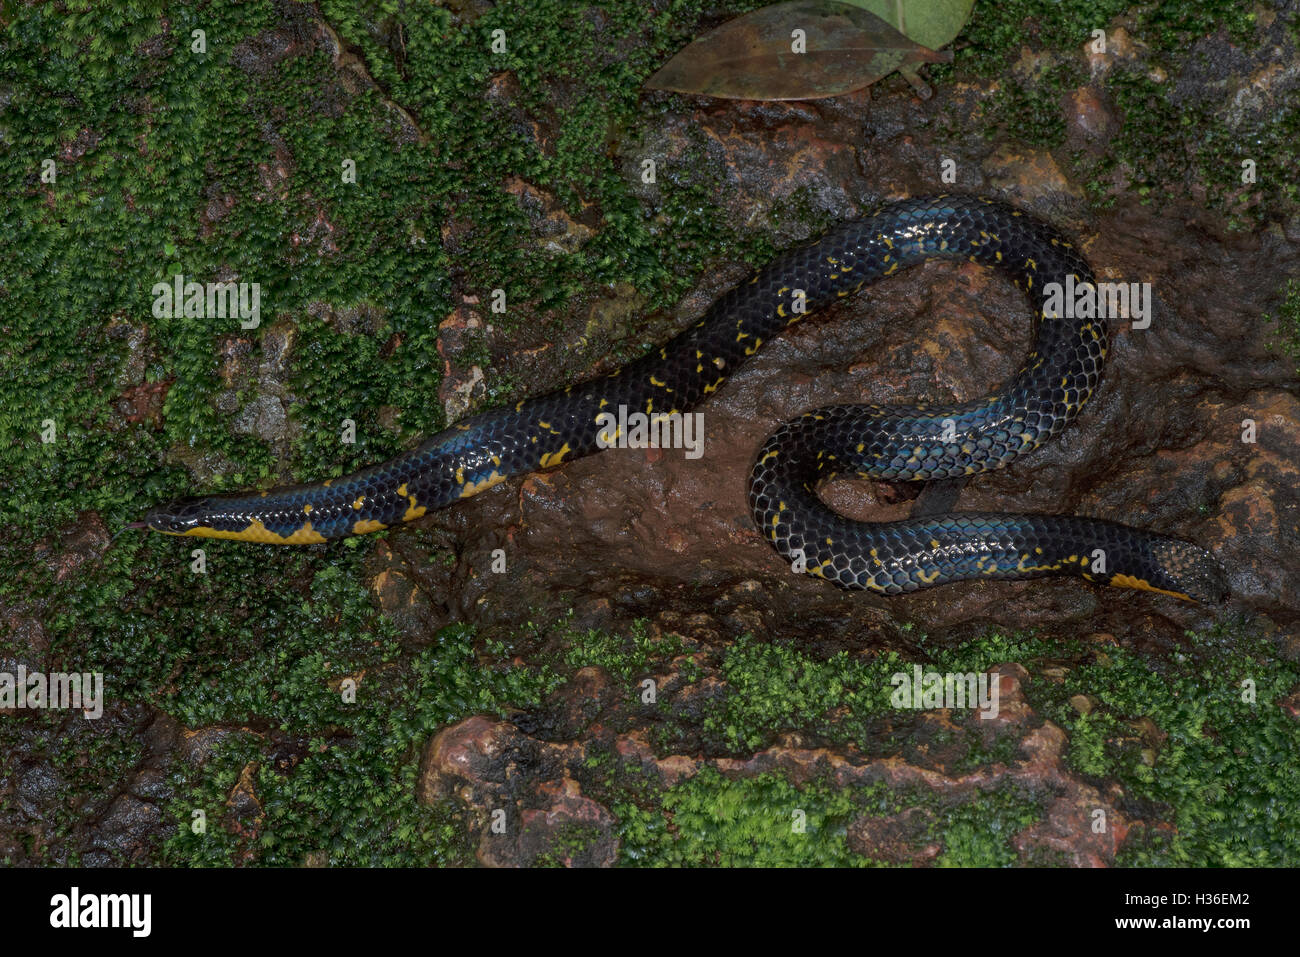 The image of Bombay Shieldtail Snake (Uropeltis macrolepis) in matheran, Maharashtra, India Stock Photo